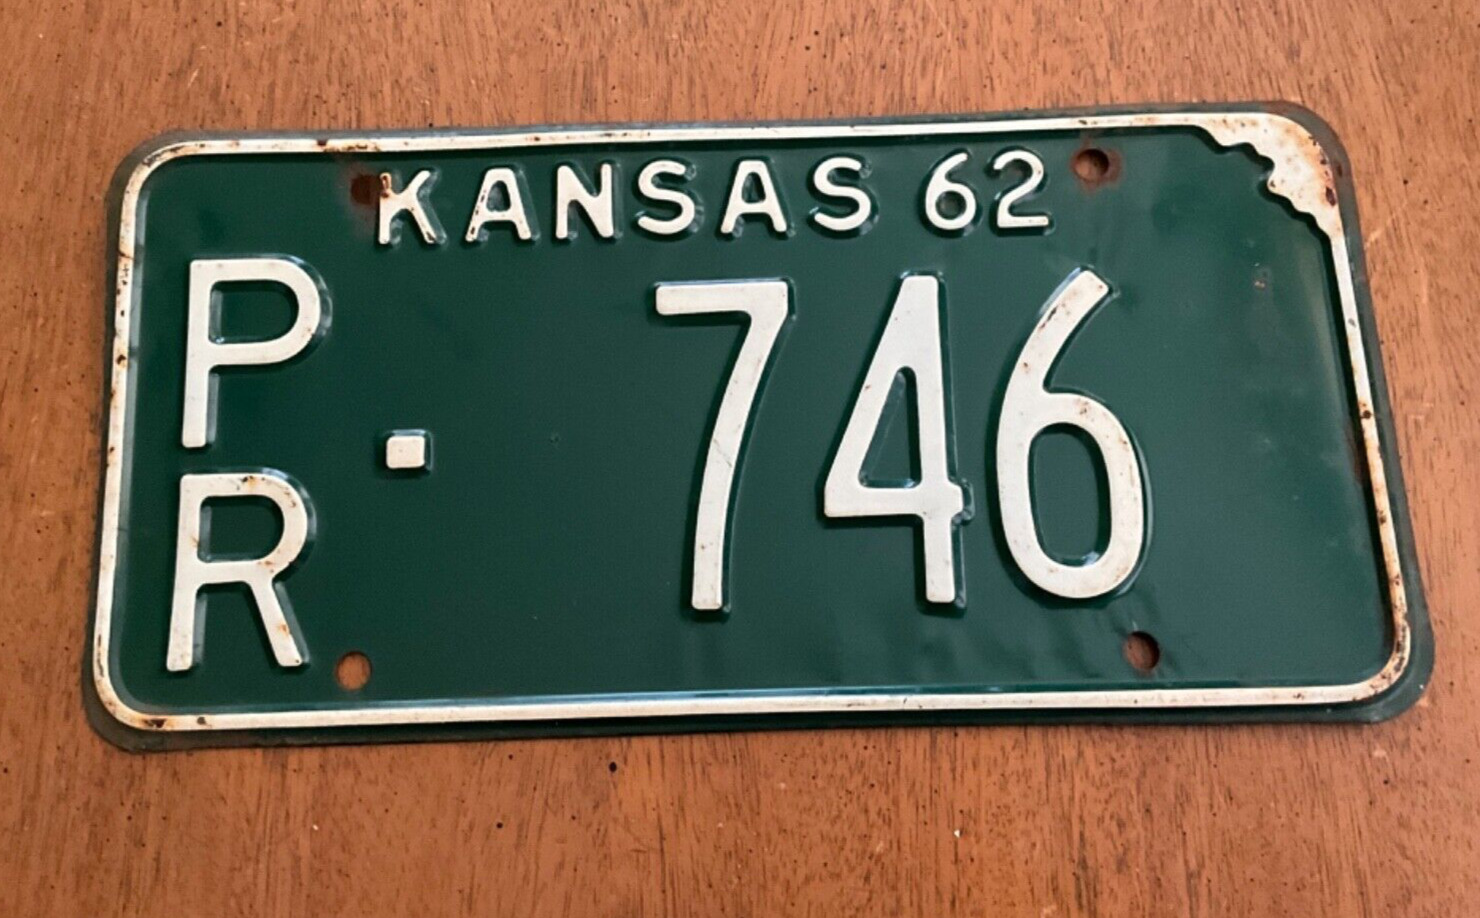 1962 Kansas License Plate Tag PR 746 Pratt